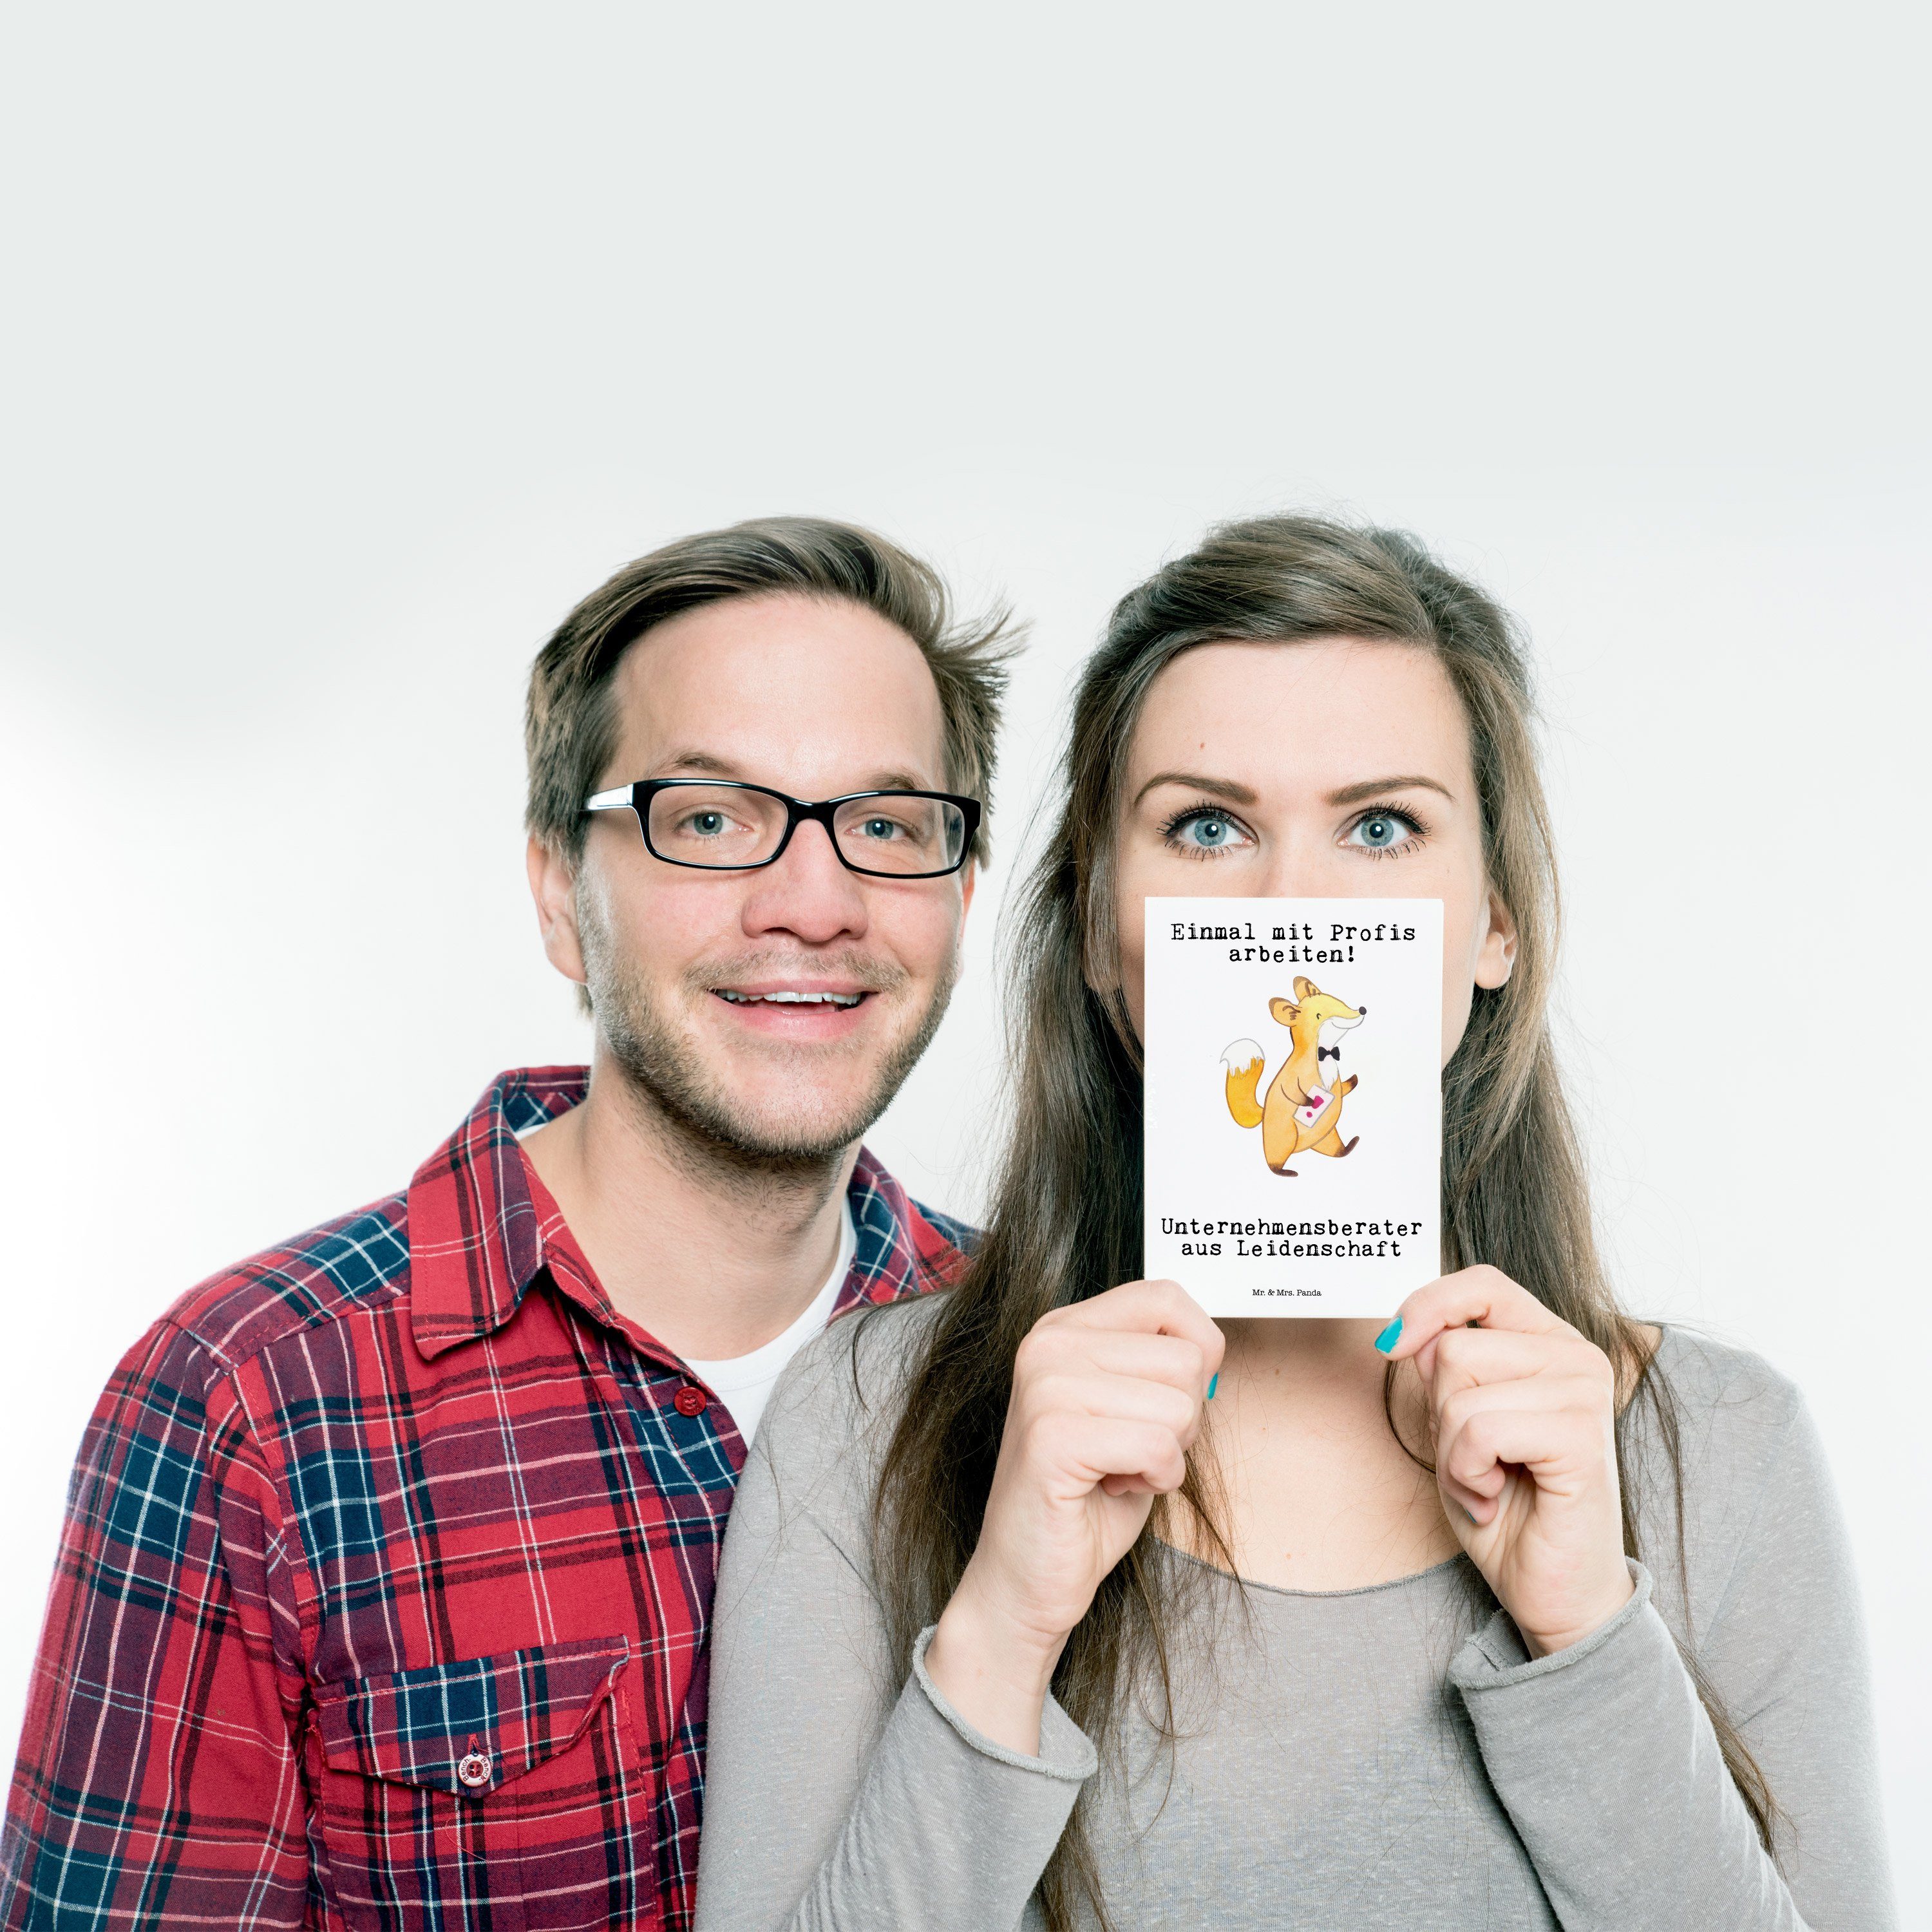 Mr. & Mrs. Panda - Karte, Postkarte Unternehmensberater Geschenk, aus Leidenschaft Weiß - Kolleg